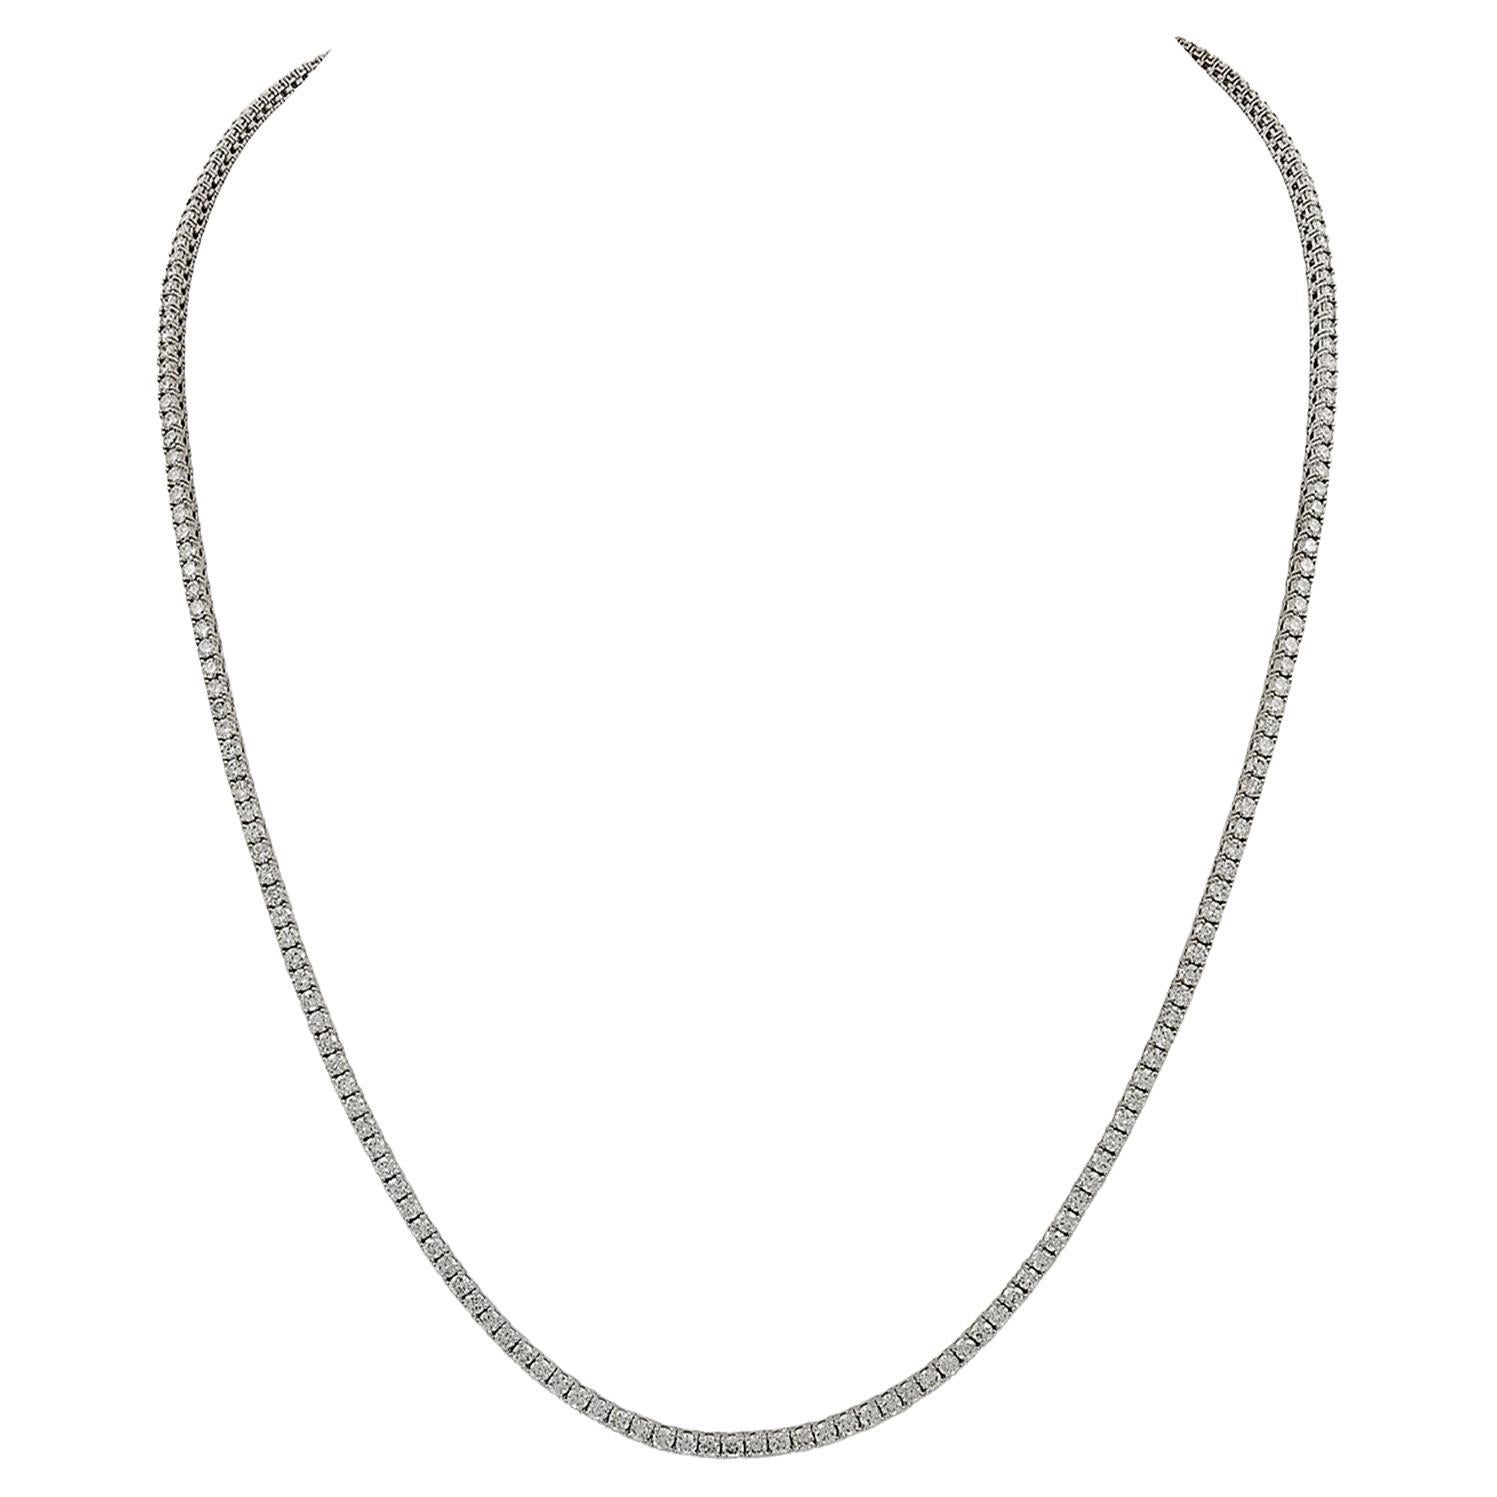 Spectra Fine Jewelry, 11.94 Carat Diamond Tennis Necklace in White Gold